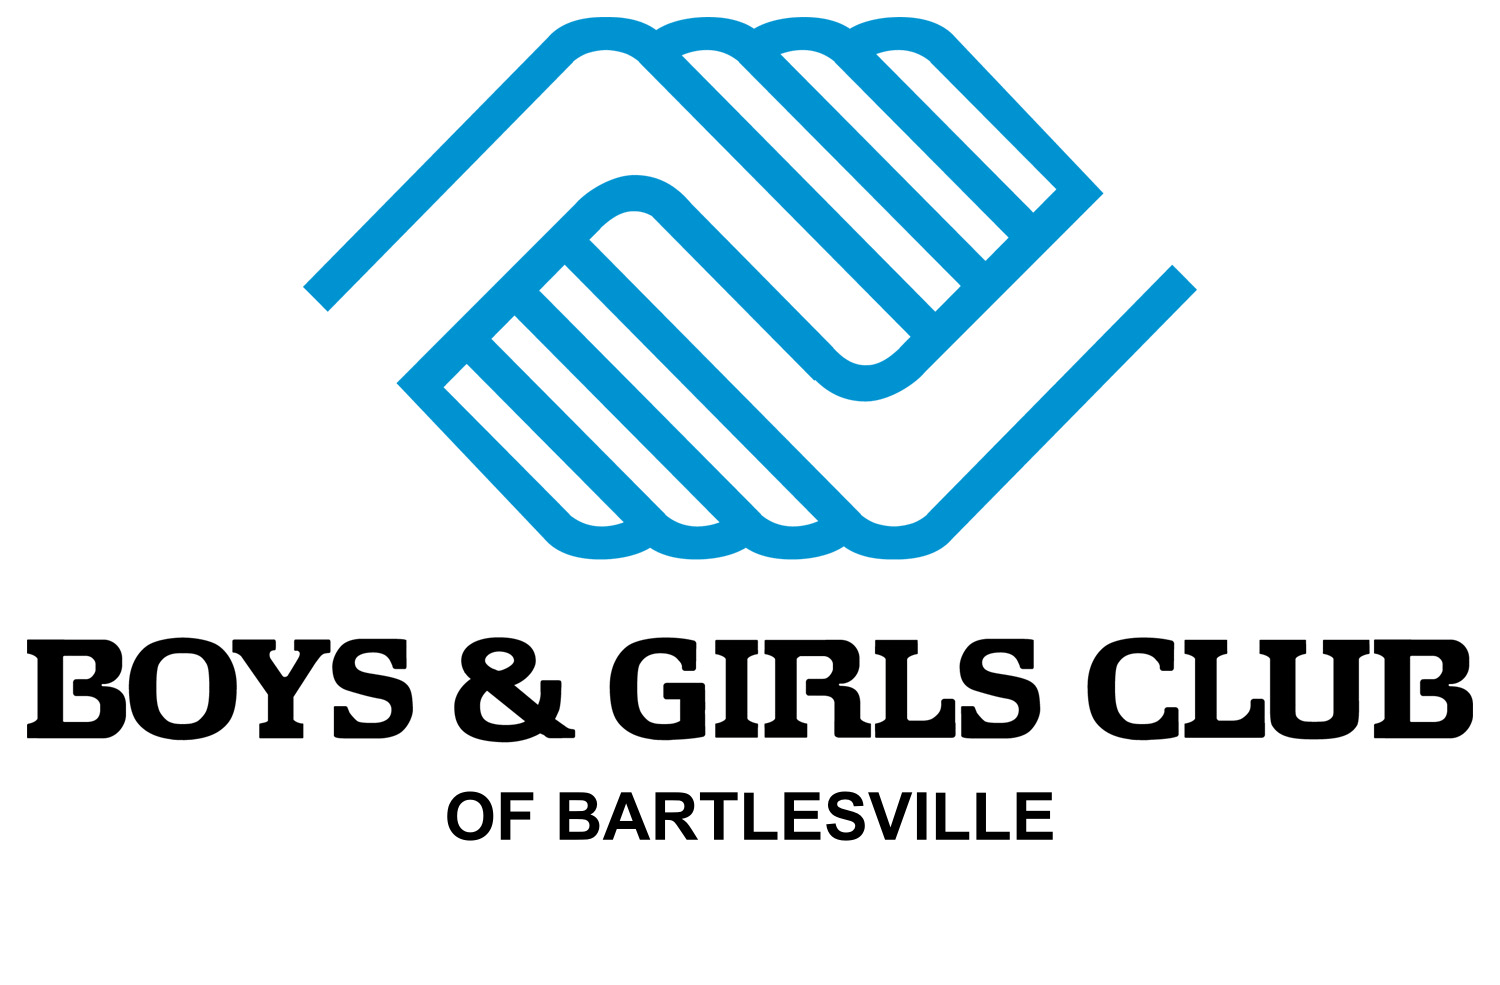 Bartlesville Logo - BGC Bville logo - Boys & Girls Club of Bartlesville